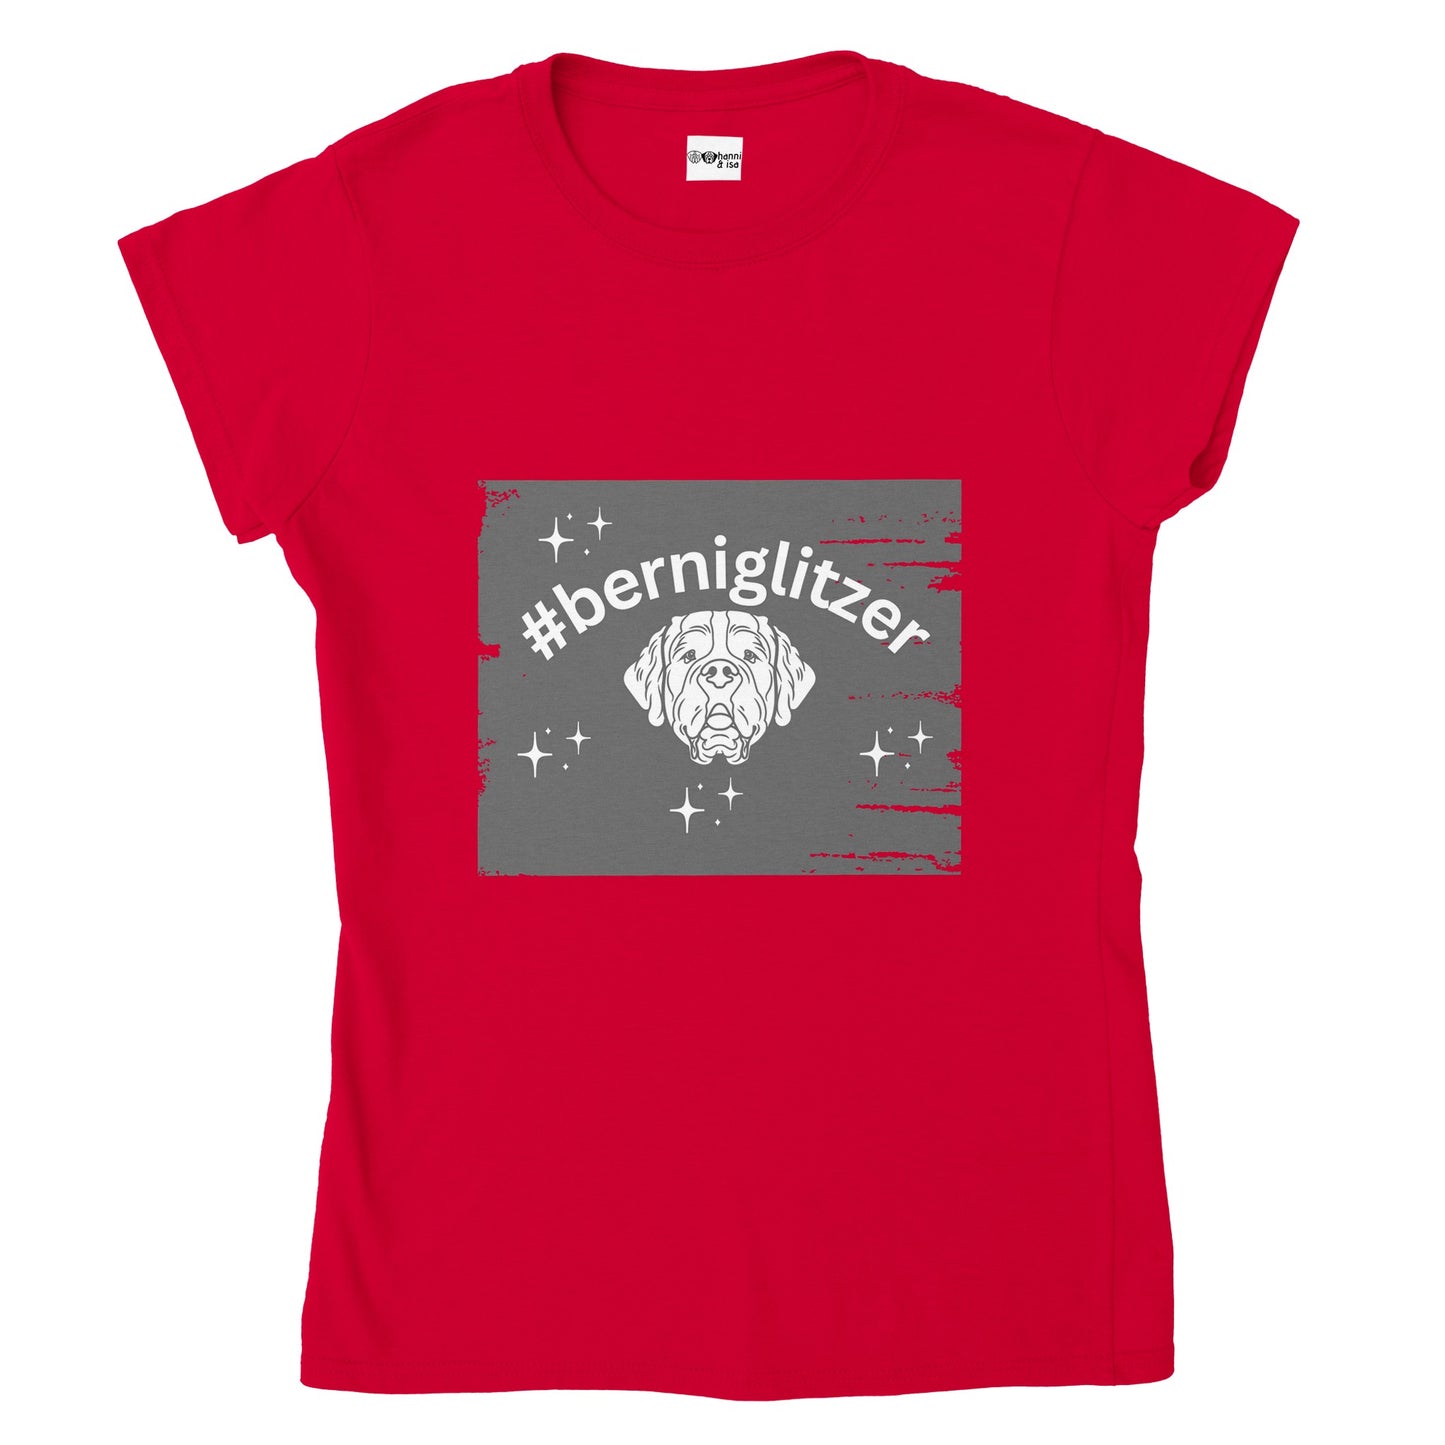 Berniglitzer Nelly women's T-shirt